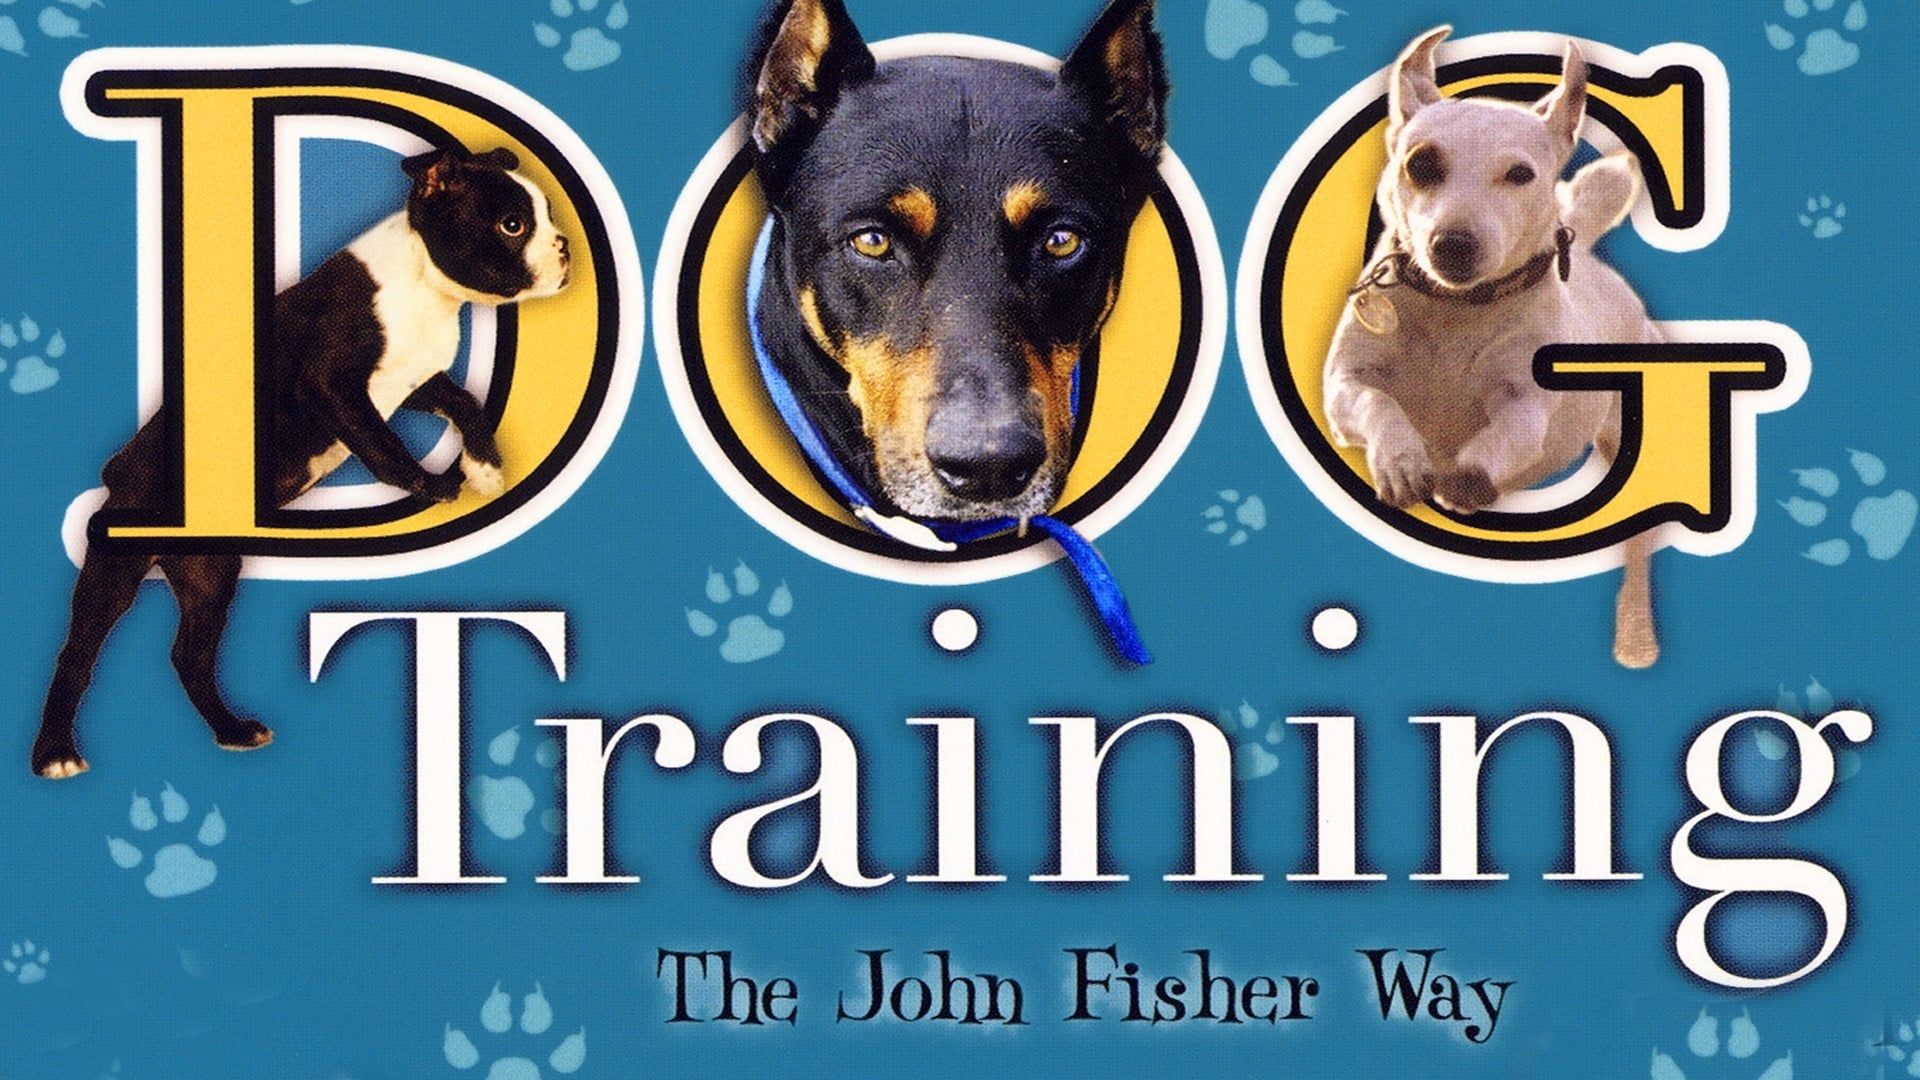 Dog Training the John Fisher Way Backdrop